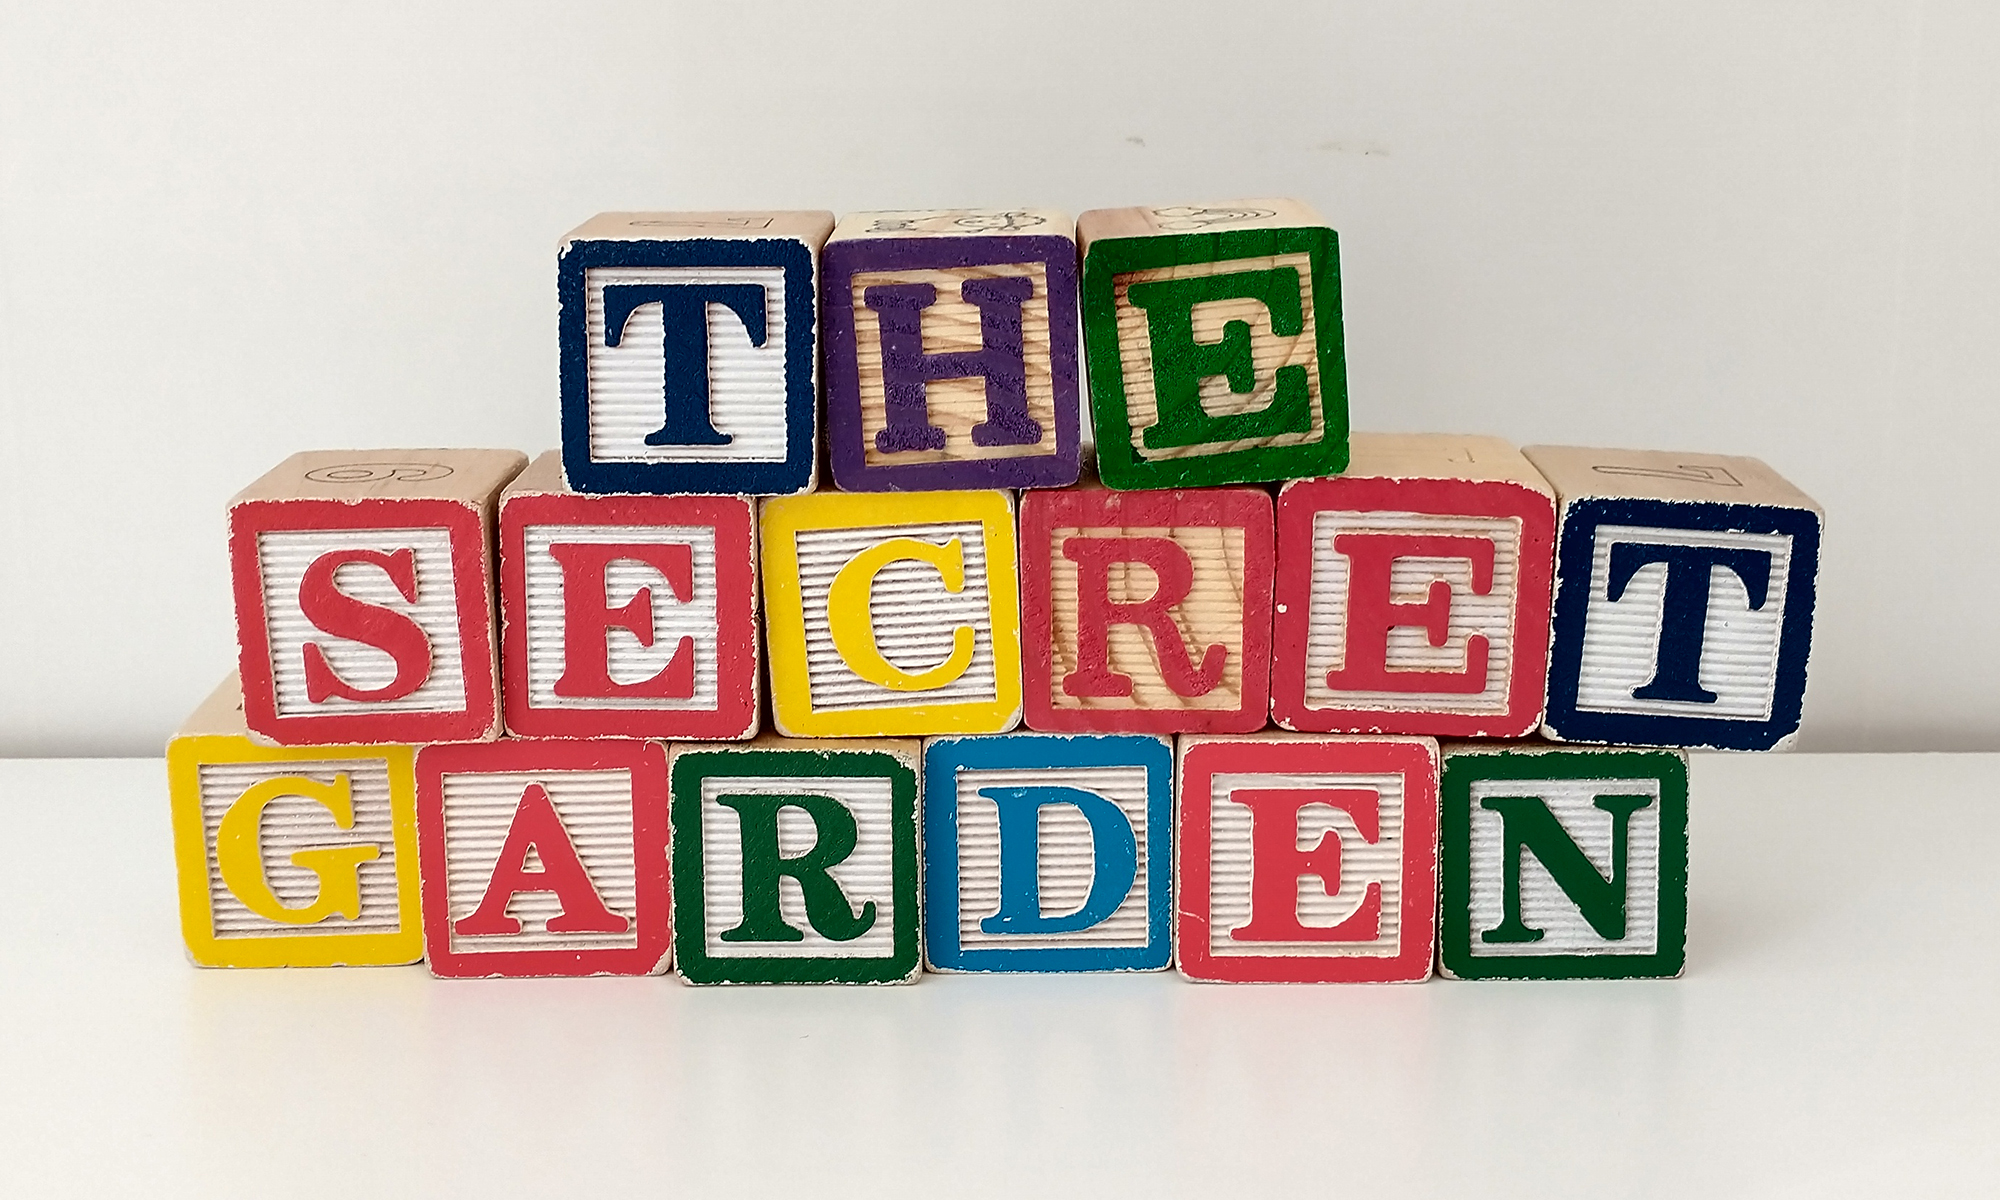 18 – Speaking Yorkshire in the Secret Garden